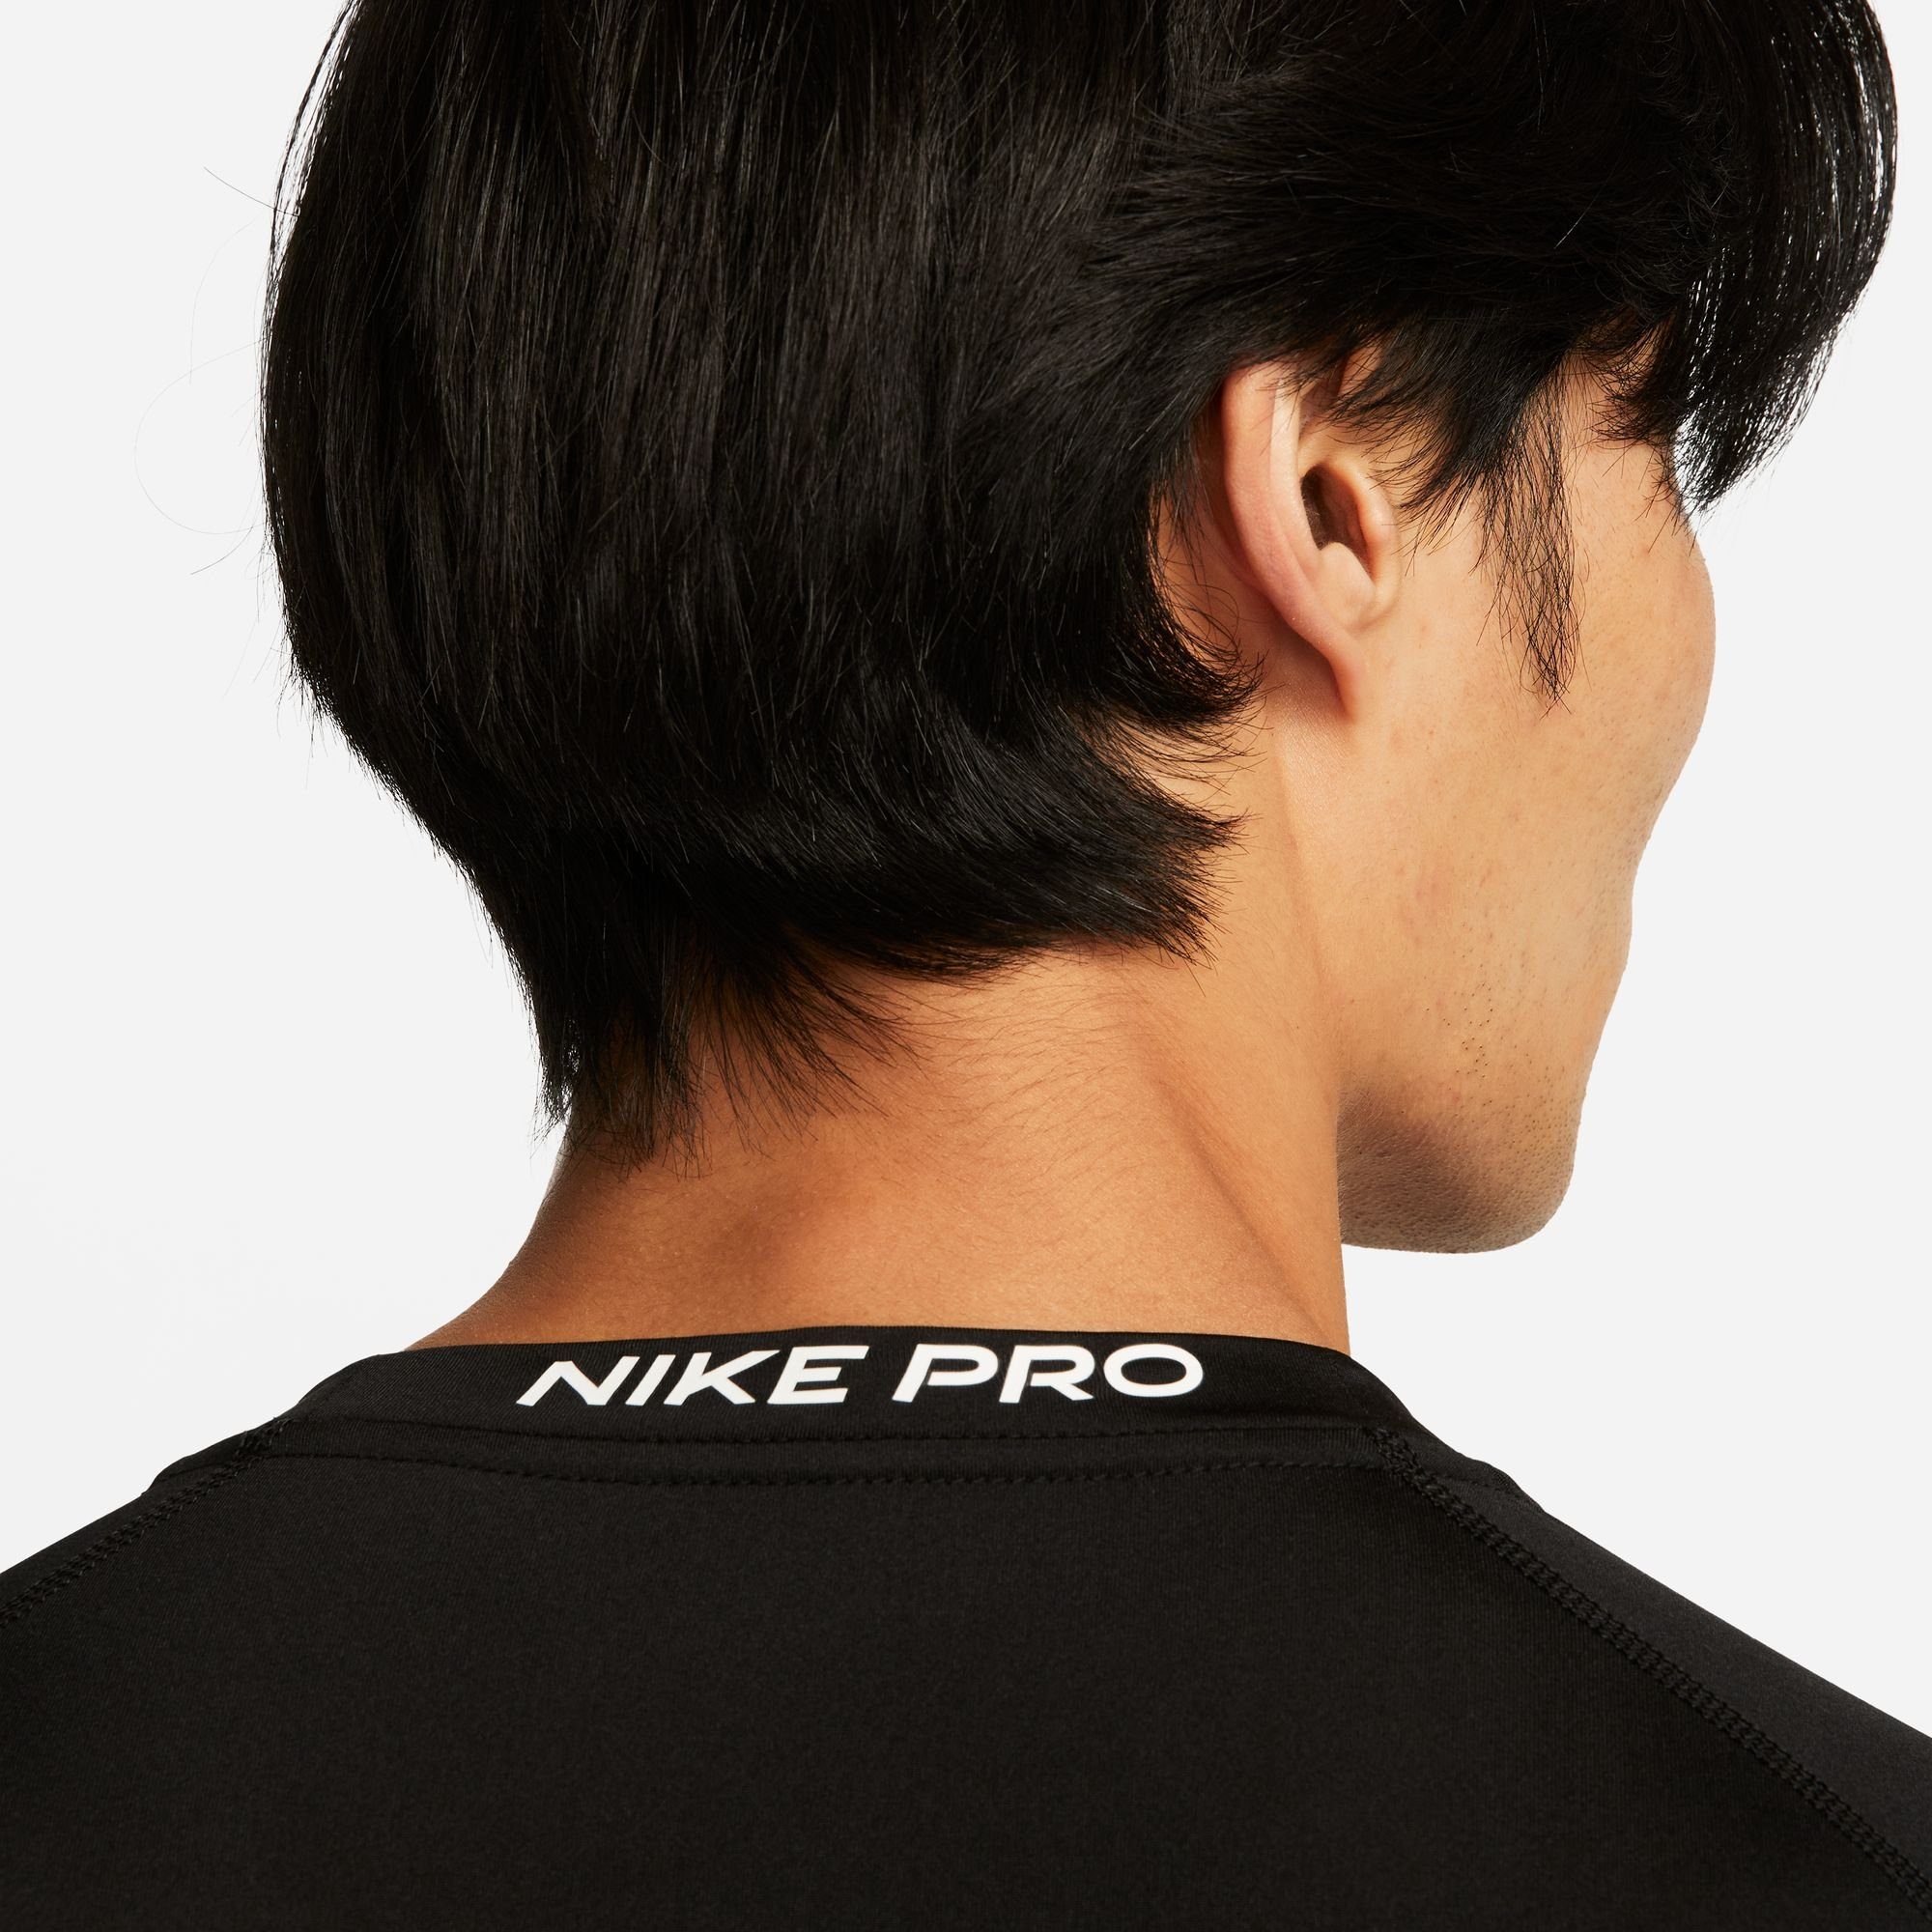 LONG-SLEEVE Nike PRO Trainingsshirt TOP MEN'S DRI-FIT